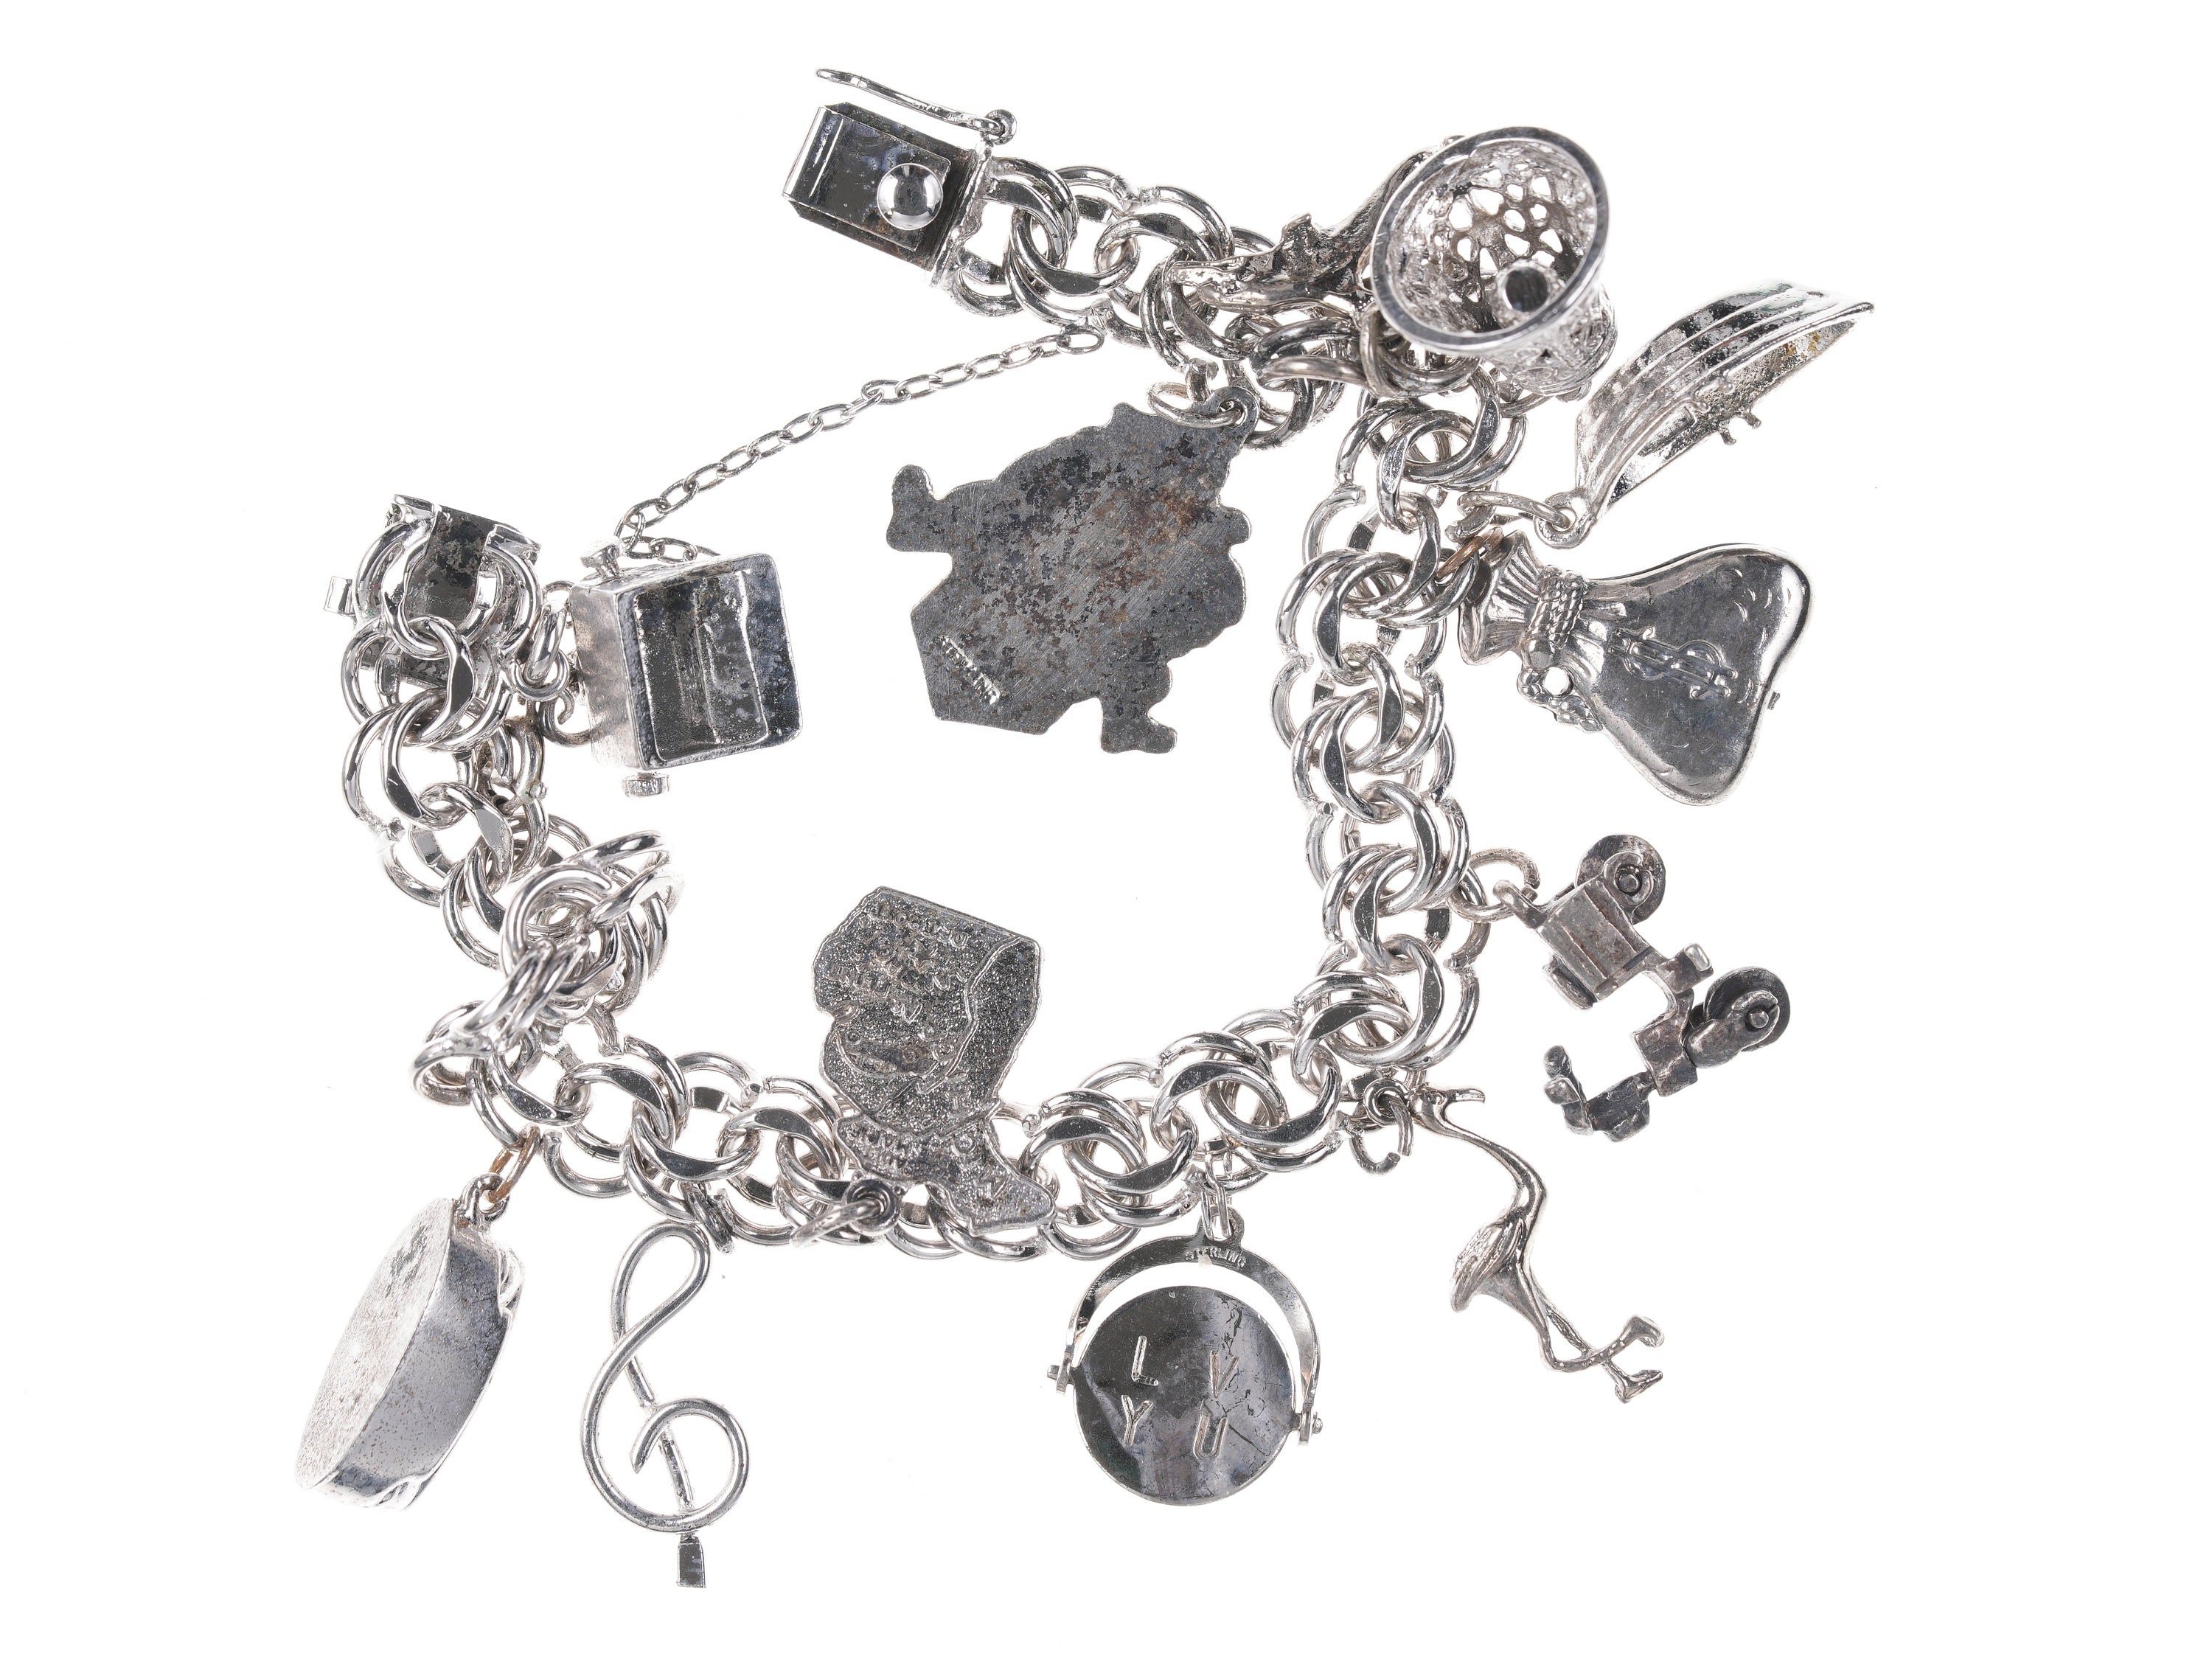 Edwardian Sterling Silver Repoussé Bangle Bracelet with Heart Charm